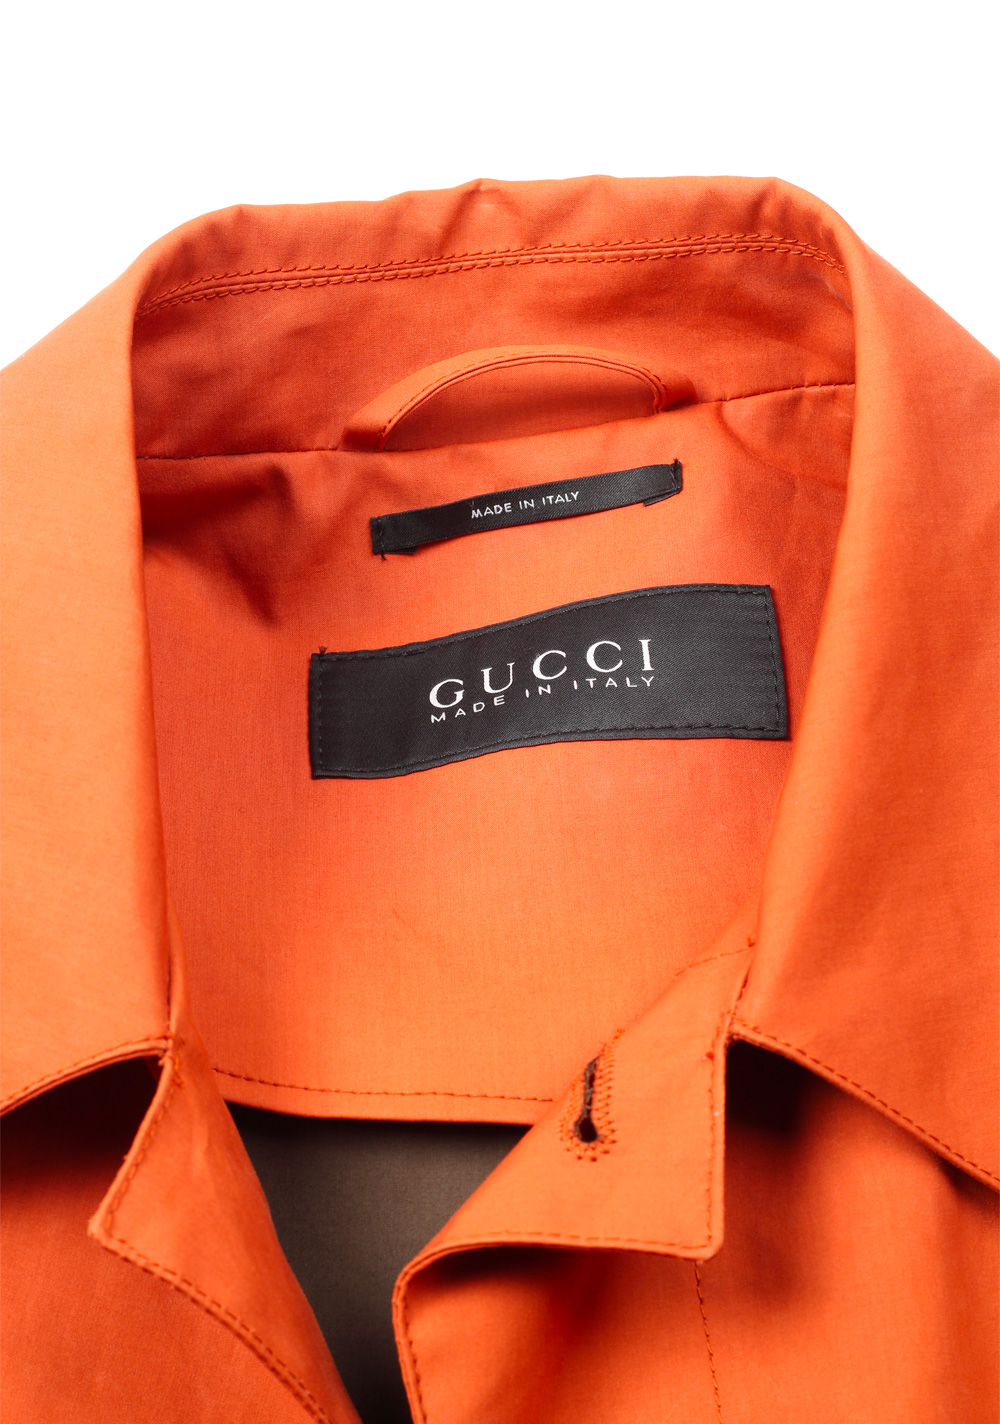 Gucci Orange Rain Coat Size 48 / 38R U.S. In Cotton | Costume Limité